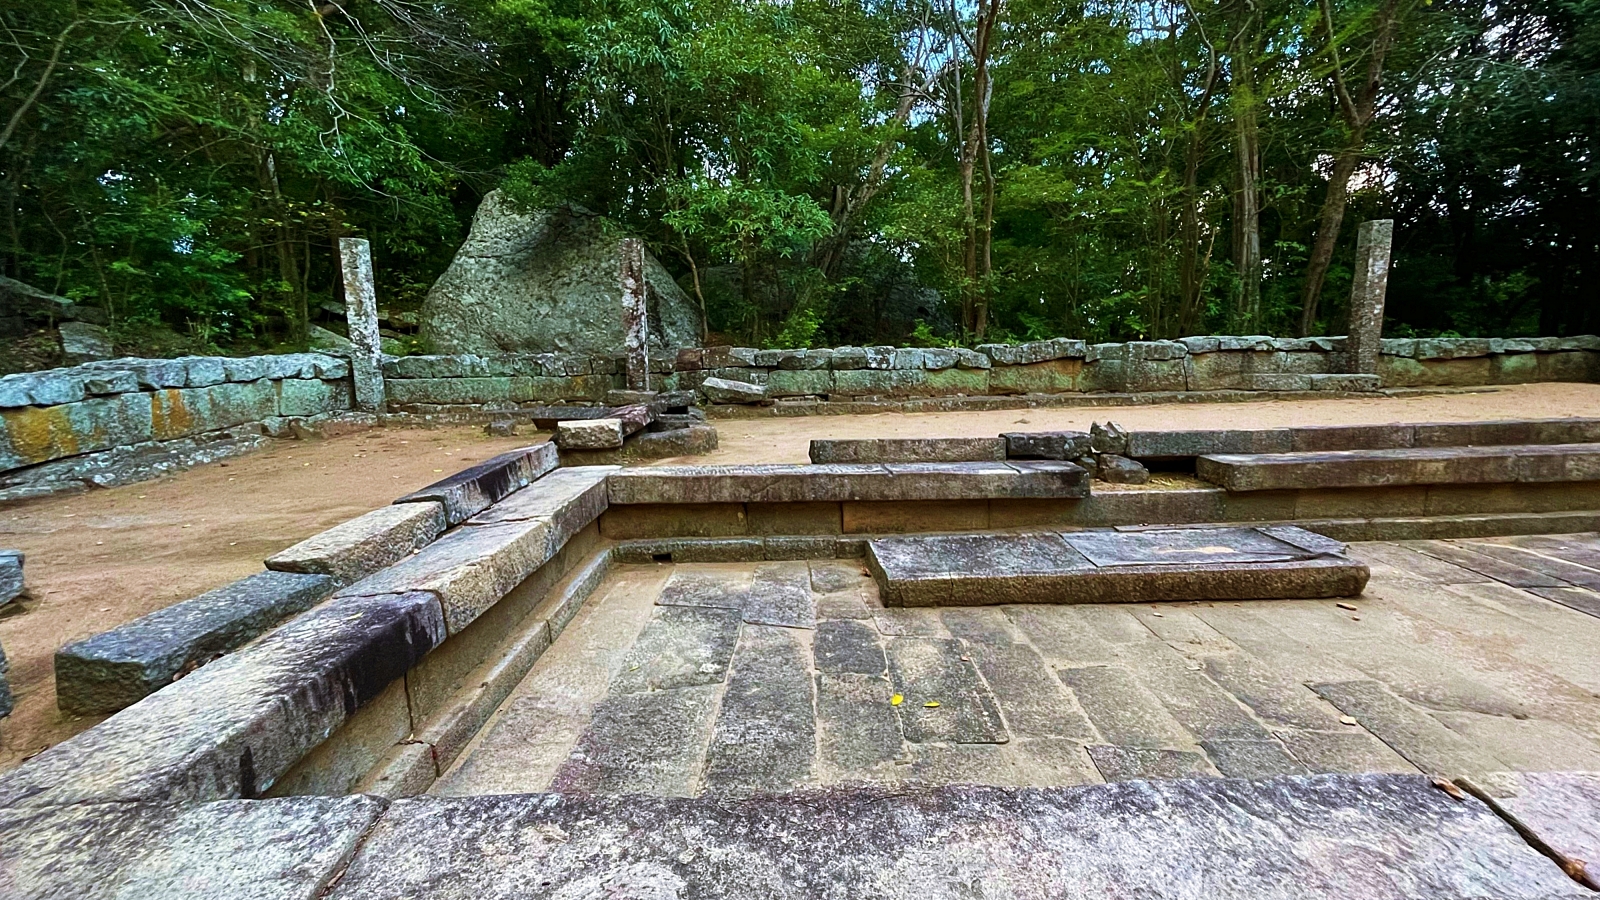 Ritigala Janthagara stone structure